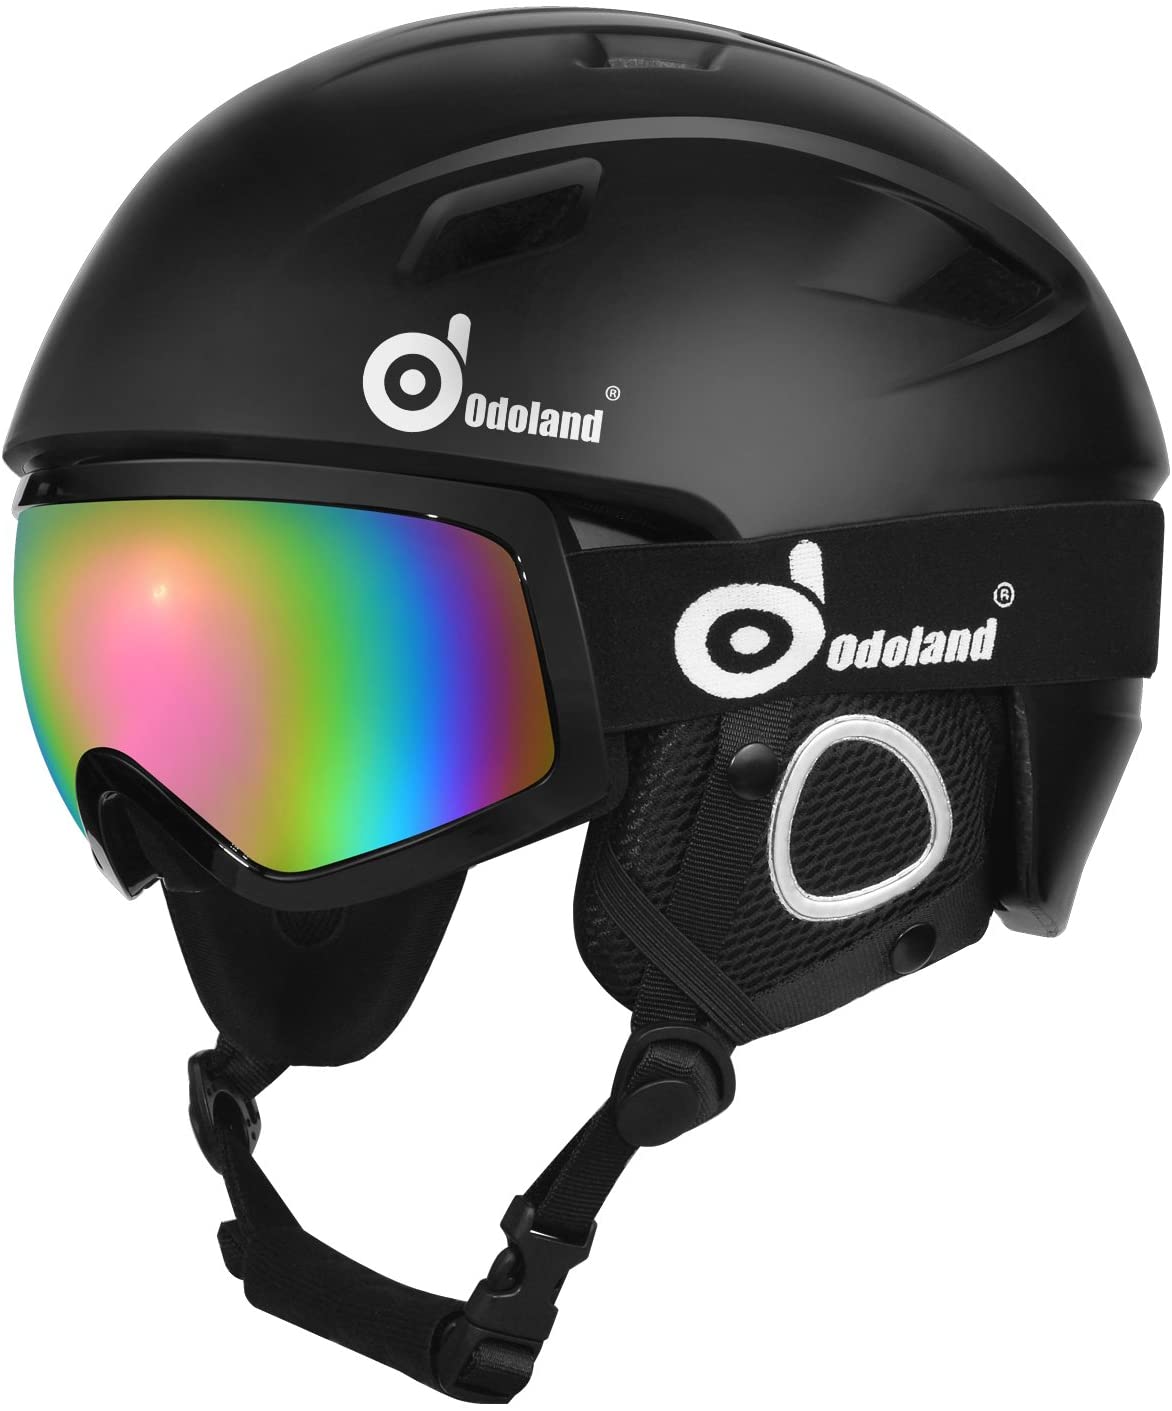 Odoland Windproof Kids Ski Helmet